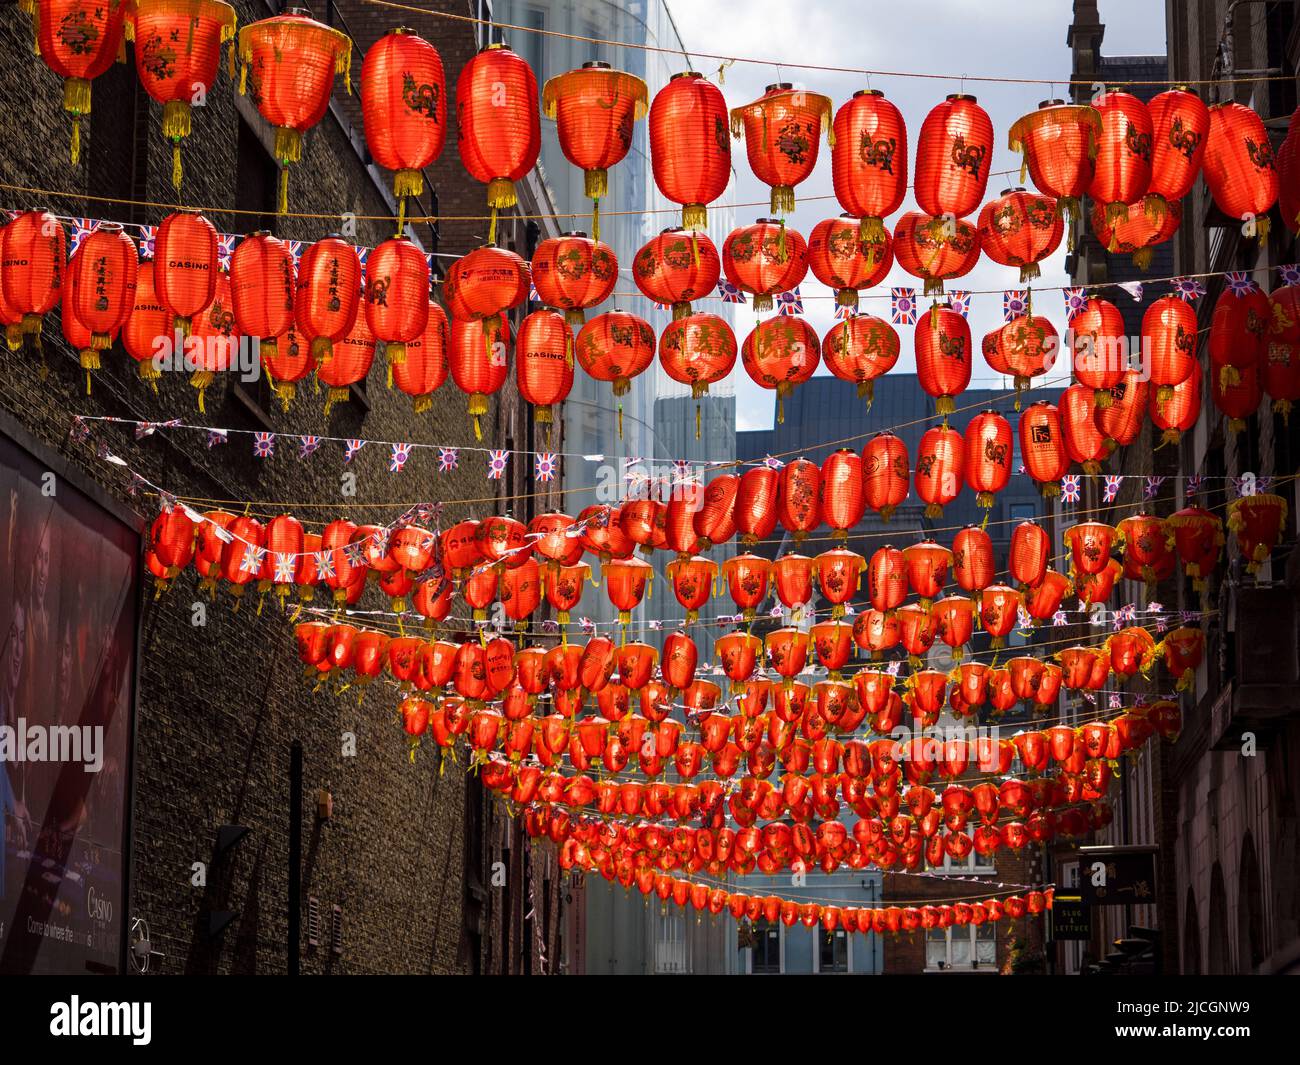 Lanternes chinoises rouges, China Town, Londres, Angleterre, Royaume-Uni, GO. Banque D'Images